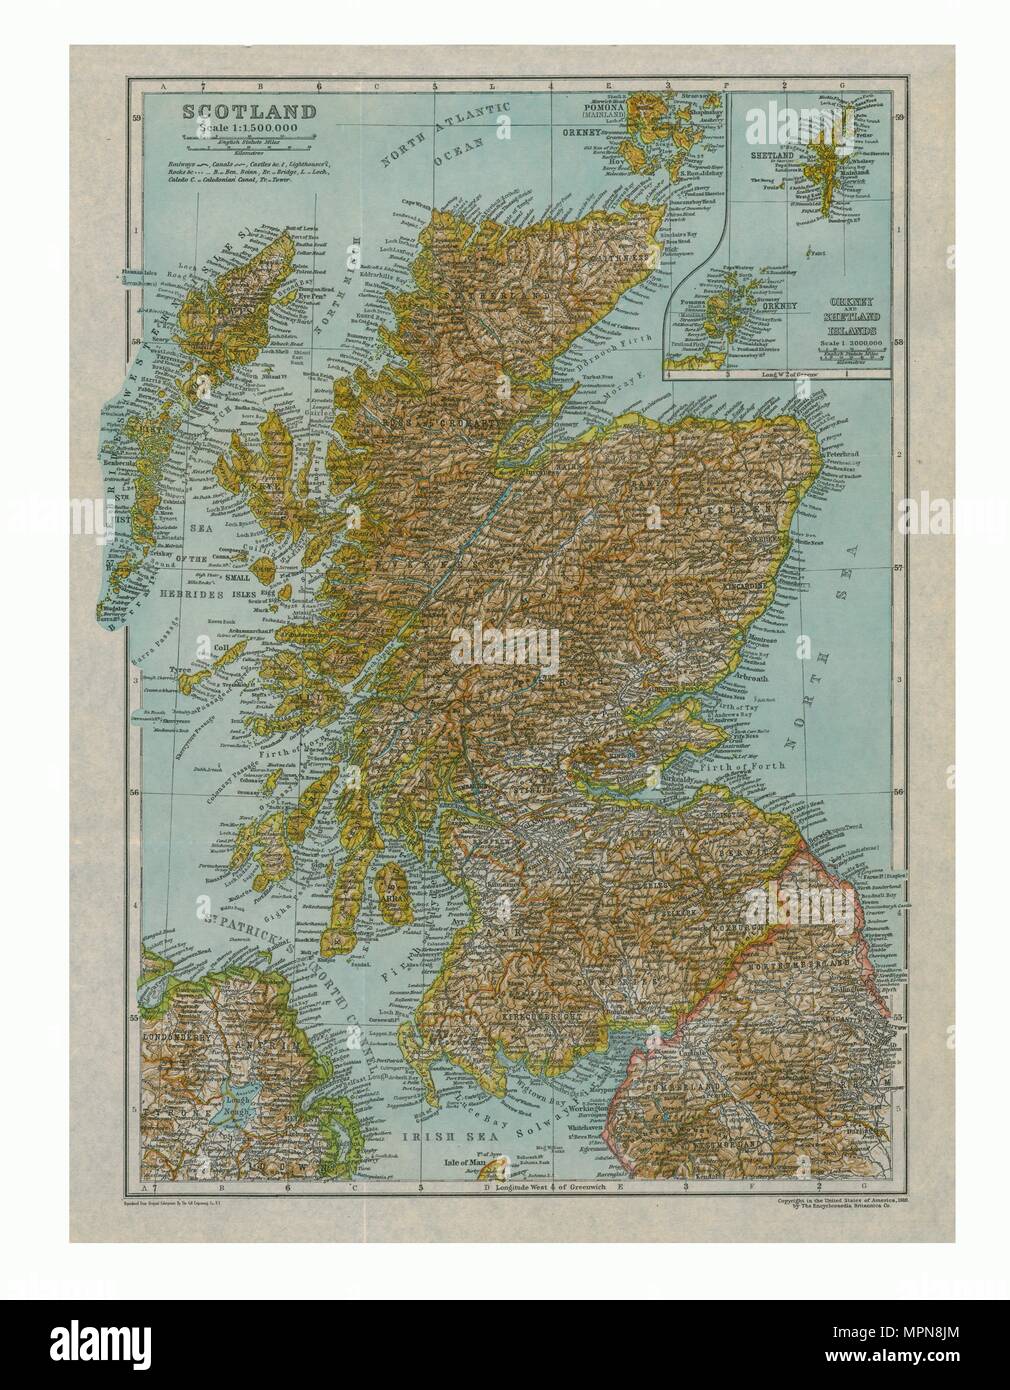 Map of Scotland, c1910. Artist: Gull Engraving Company. Stock Photo